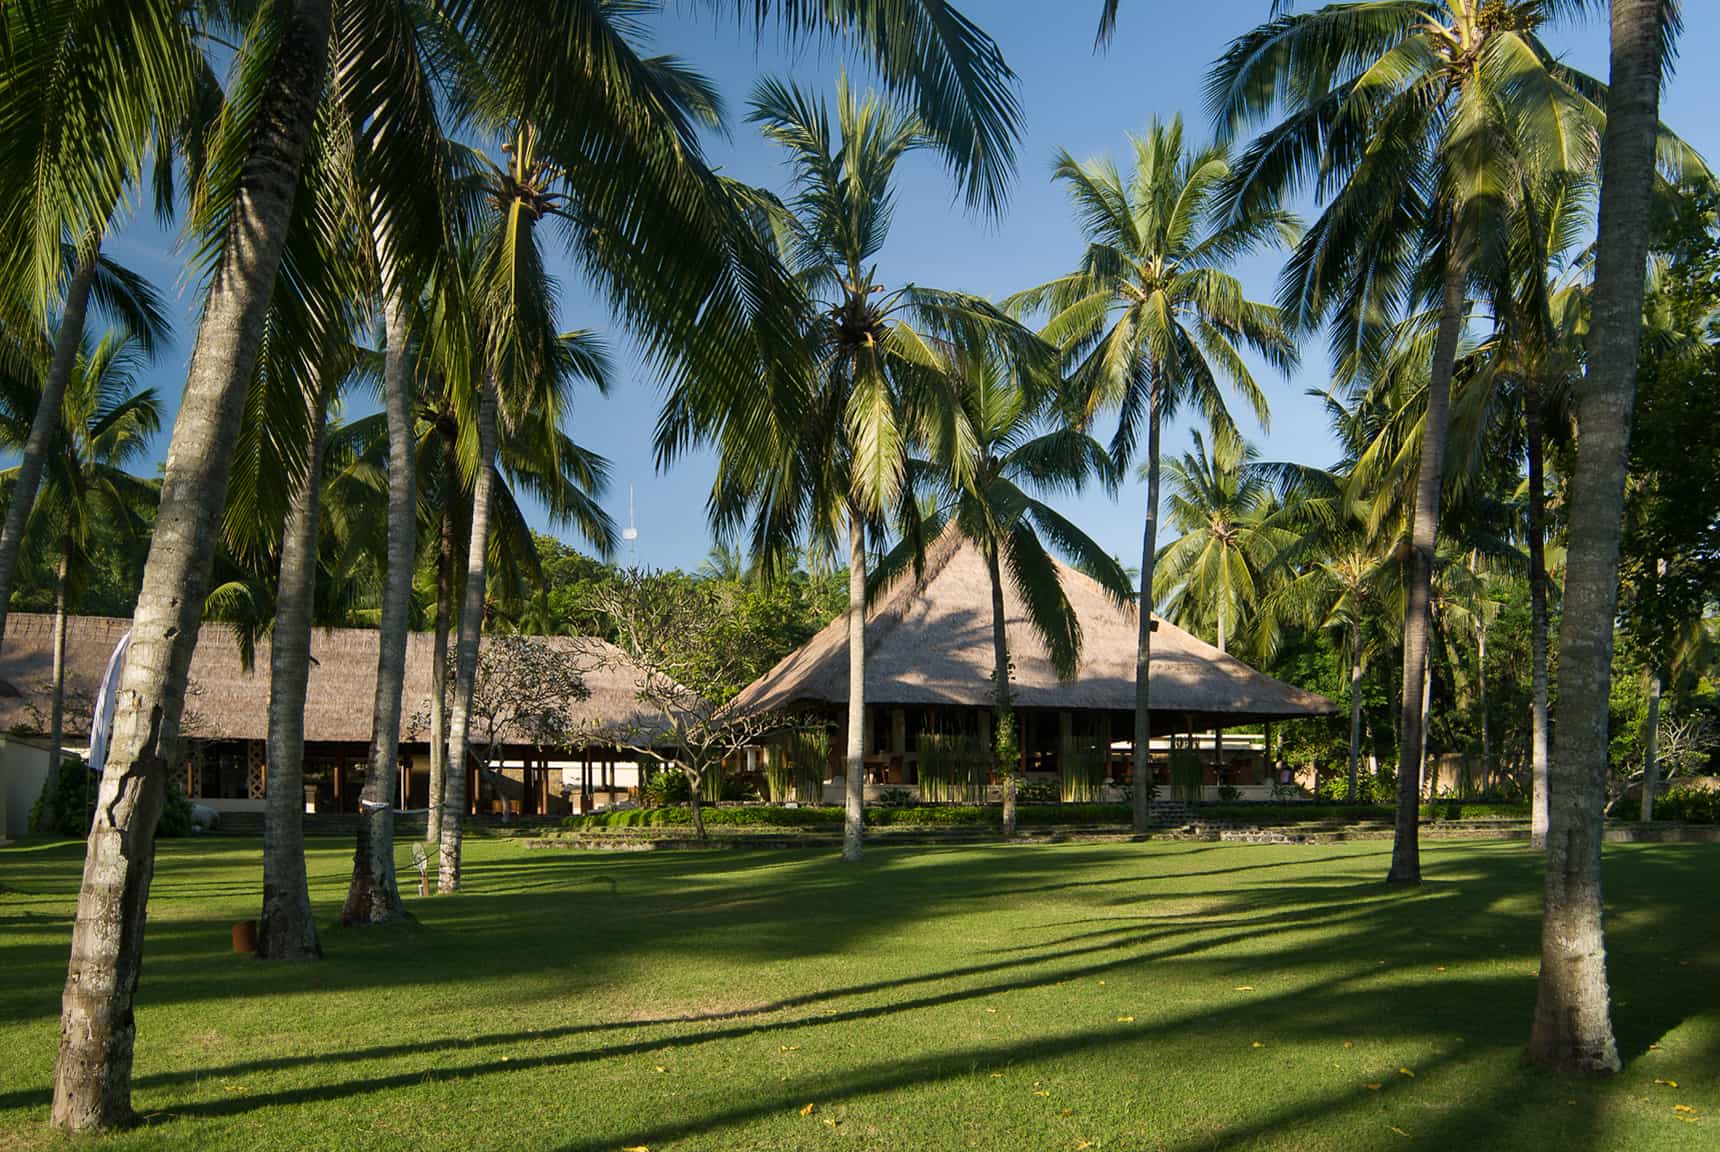 Alila Hotels and Resorts - Manggis, Bali Indonesia (Bali hotel photography by master photographer Rick Carmichael of LuxViz)